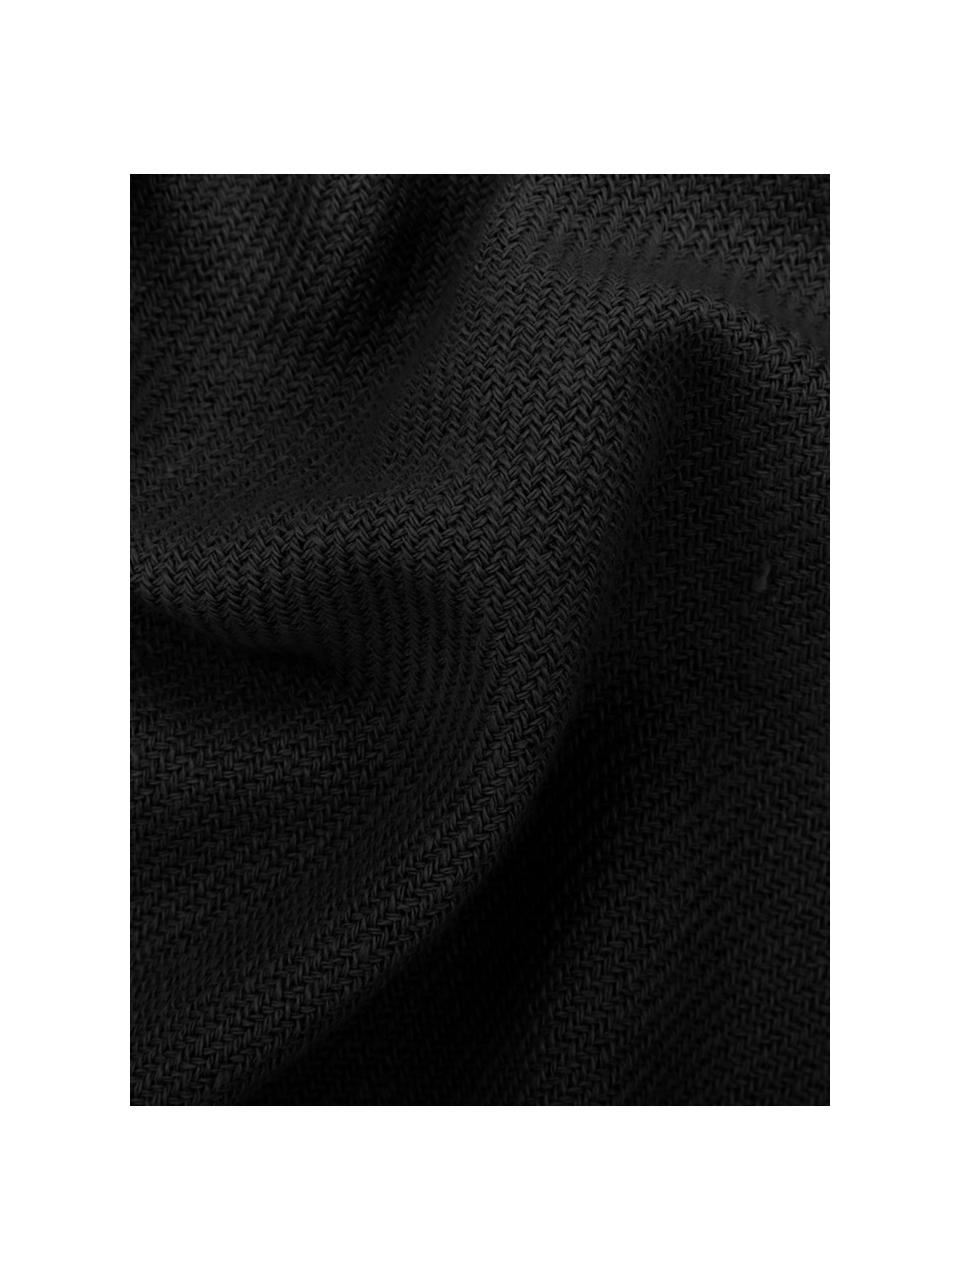 Katoenen plaid Madison in zwart met franjes, 100% katoen, Zwart, B 130 x L 170 cm